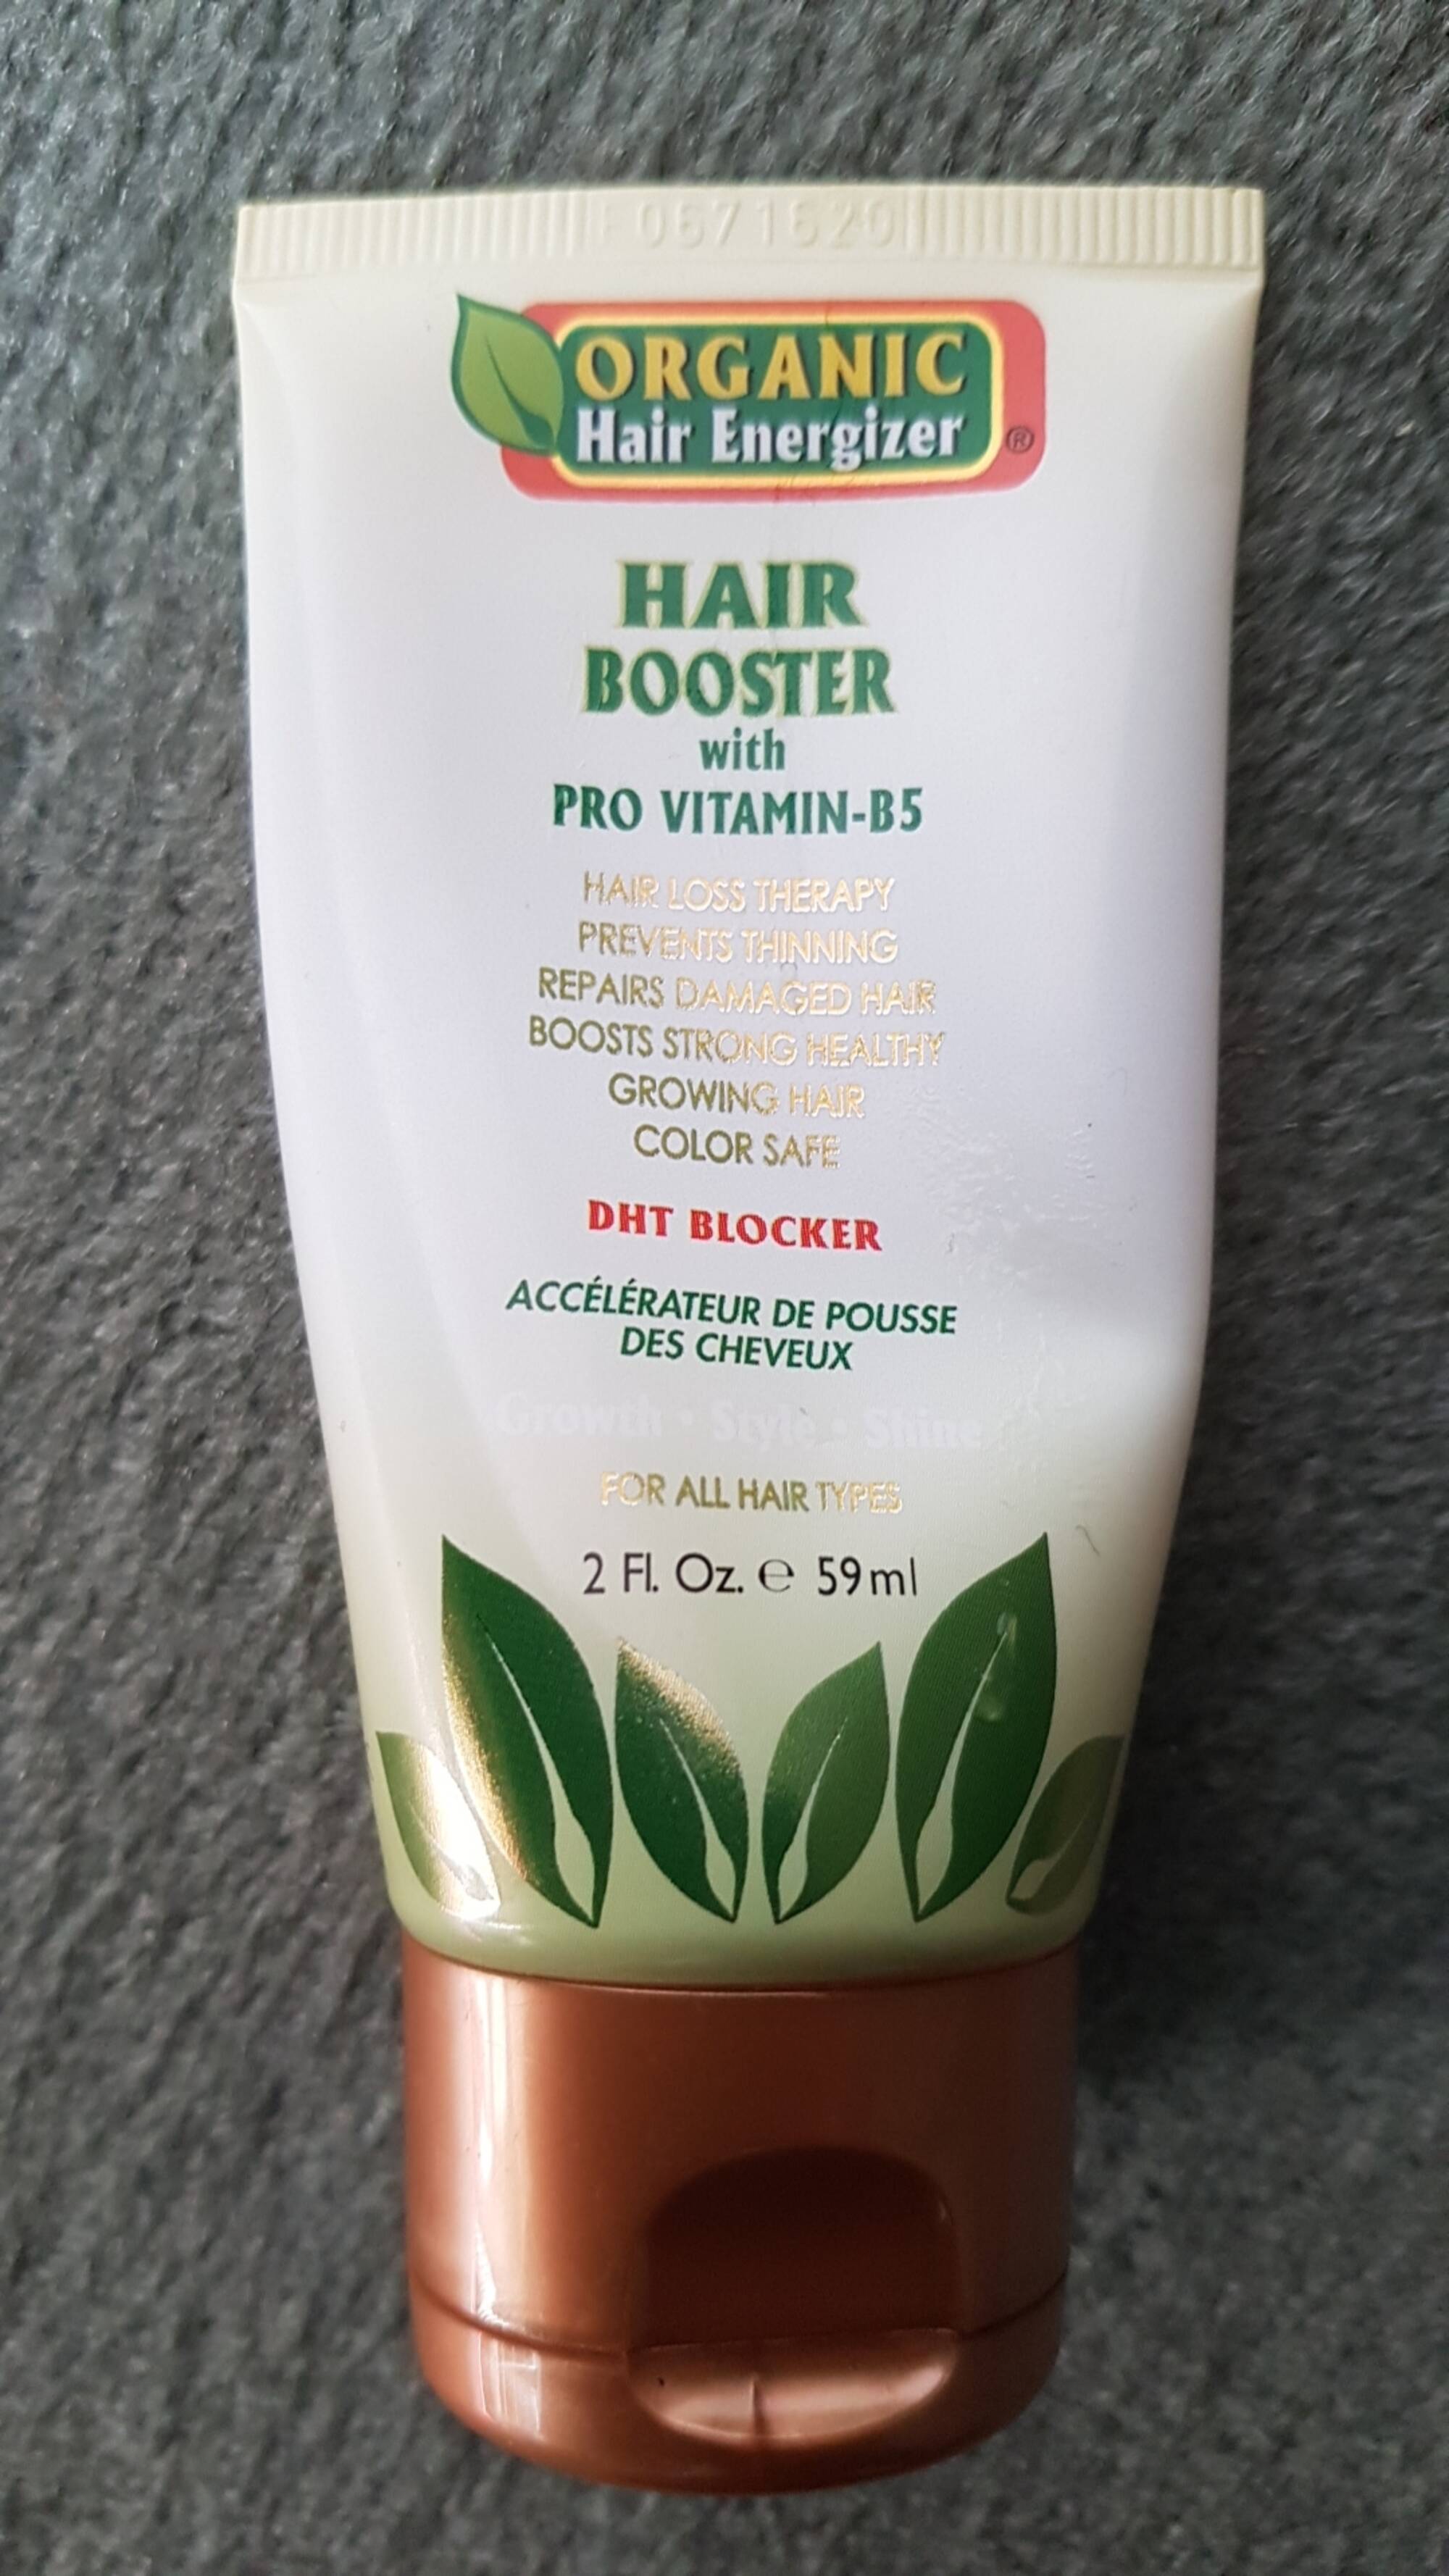 ORGANIC HAIR ENERGIZER - Hair booster with pro vitamin-b5